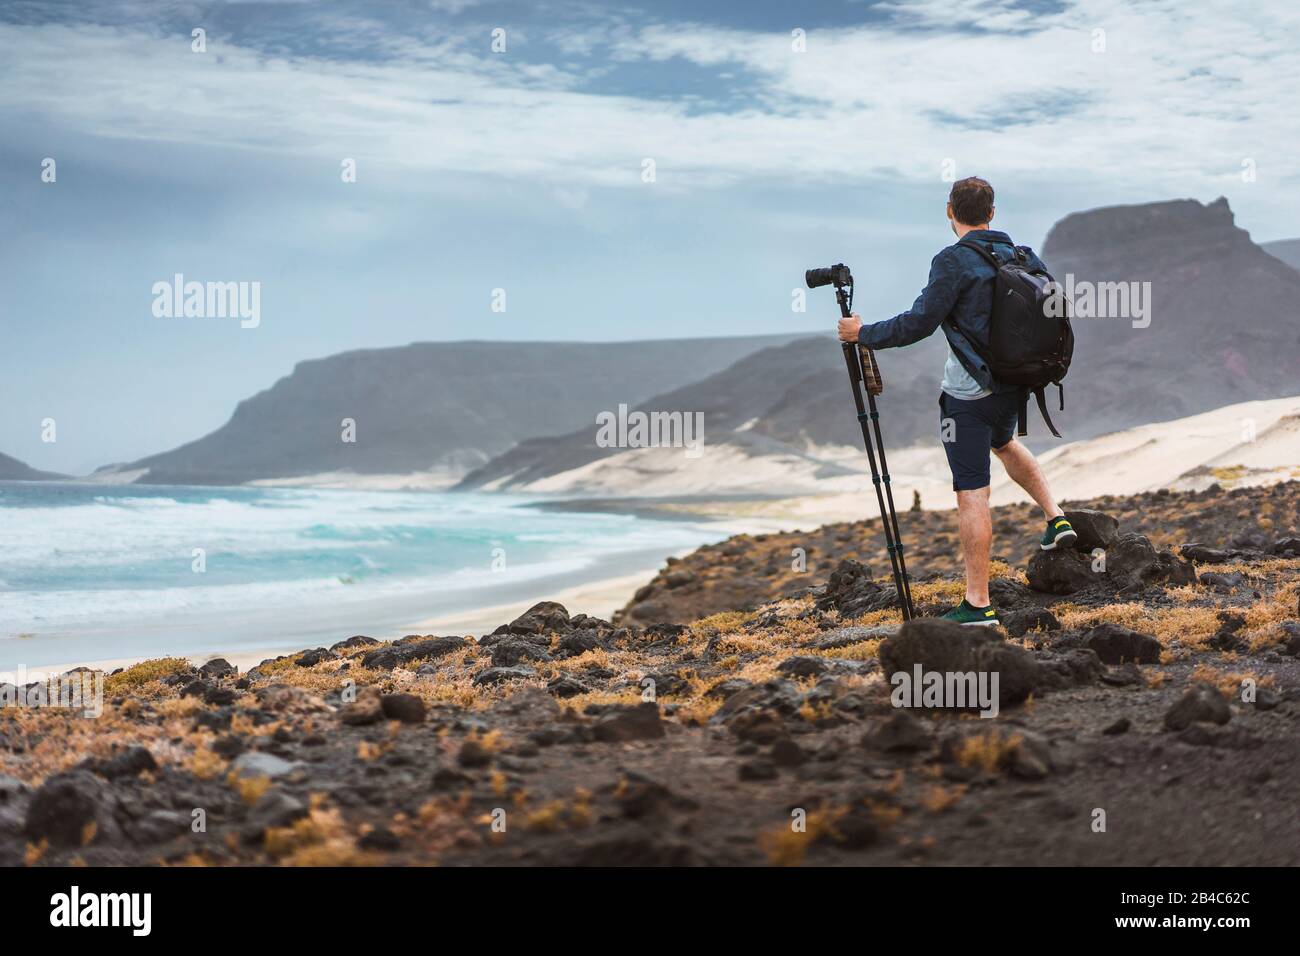 Photographer with camera on tripod in desert admitting unique landscape of sand dunes volcanic cliffs on the Atlantic coast. Baia Das Gatas, near Calhau, Sao Vicente Island Cape Verde. Stock Photo